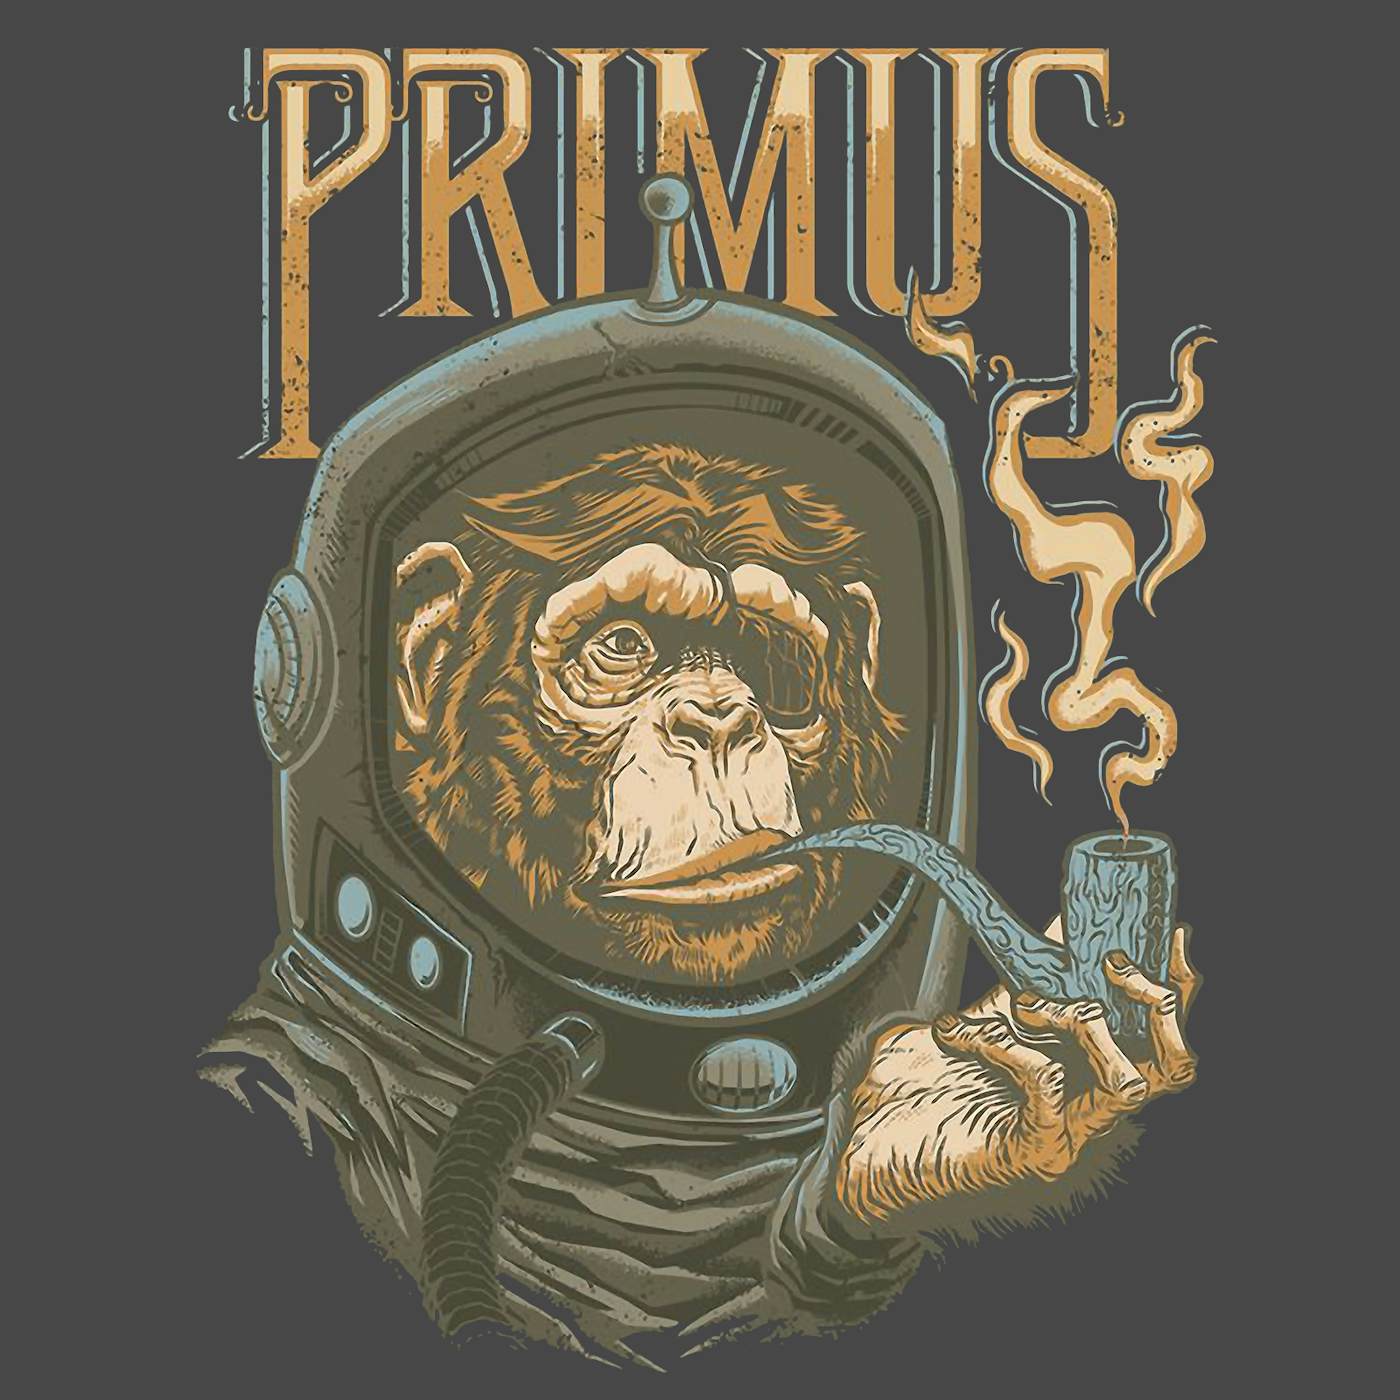 Primus T-Shirt | Astro Monkey Primus Shirt